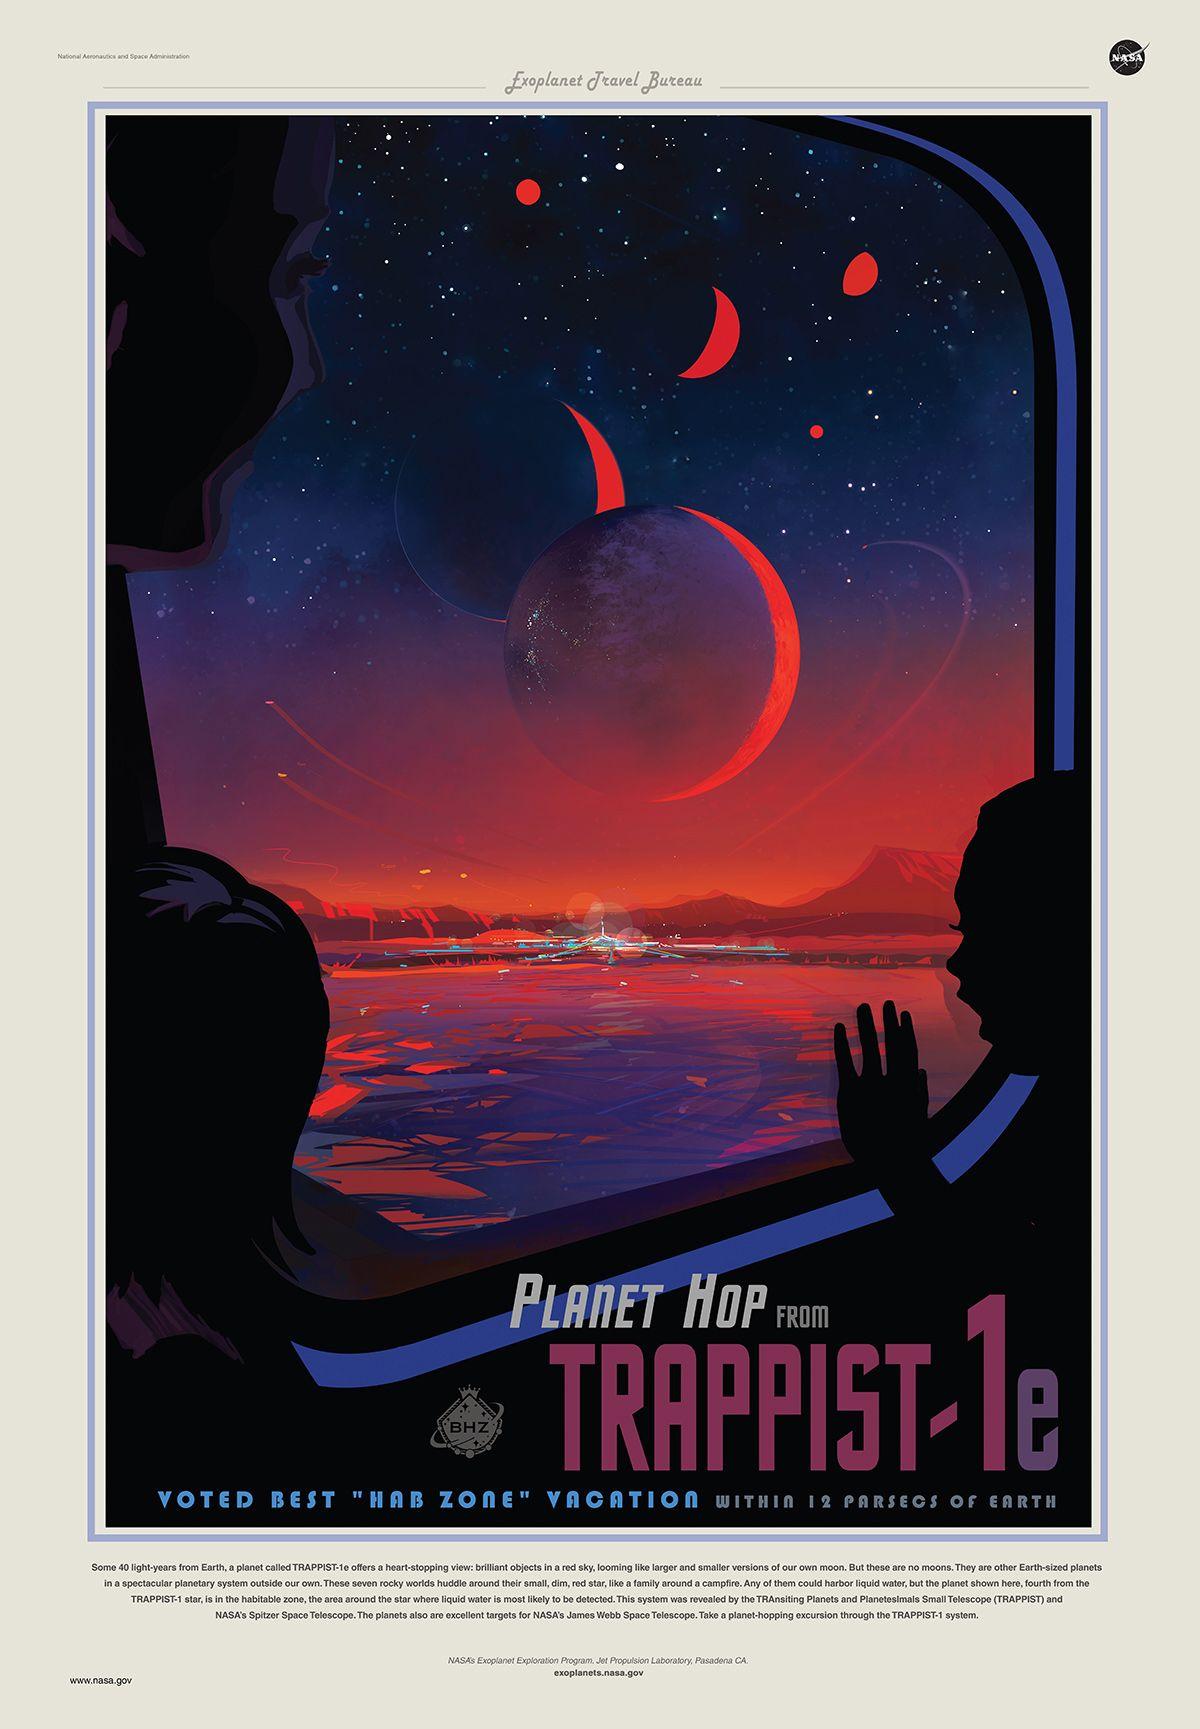 Big Printable NASA Logo - Planet Hop From TRAPPIST 1e